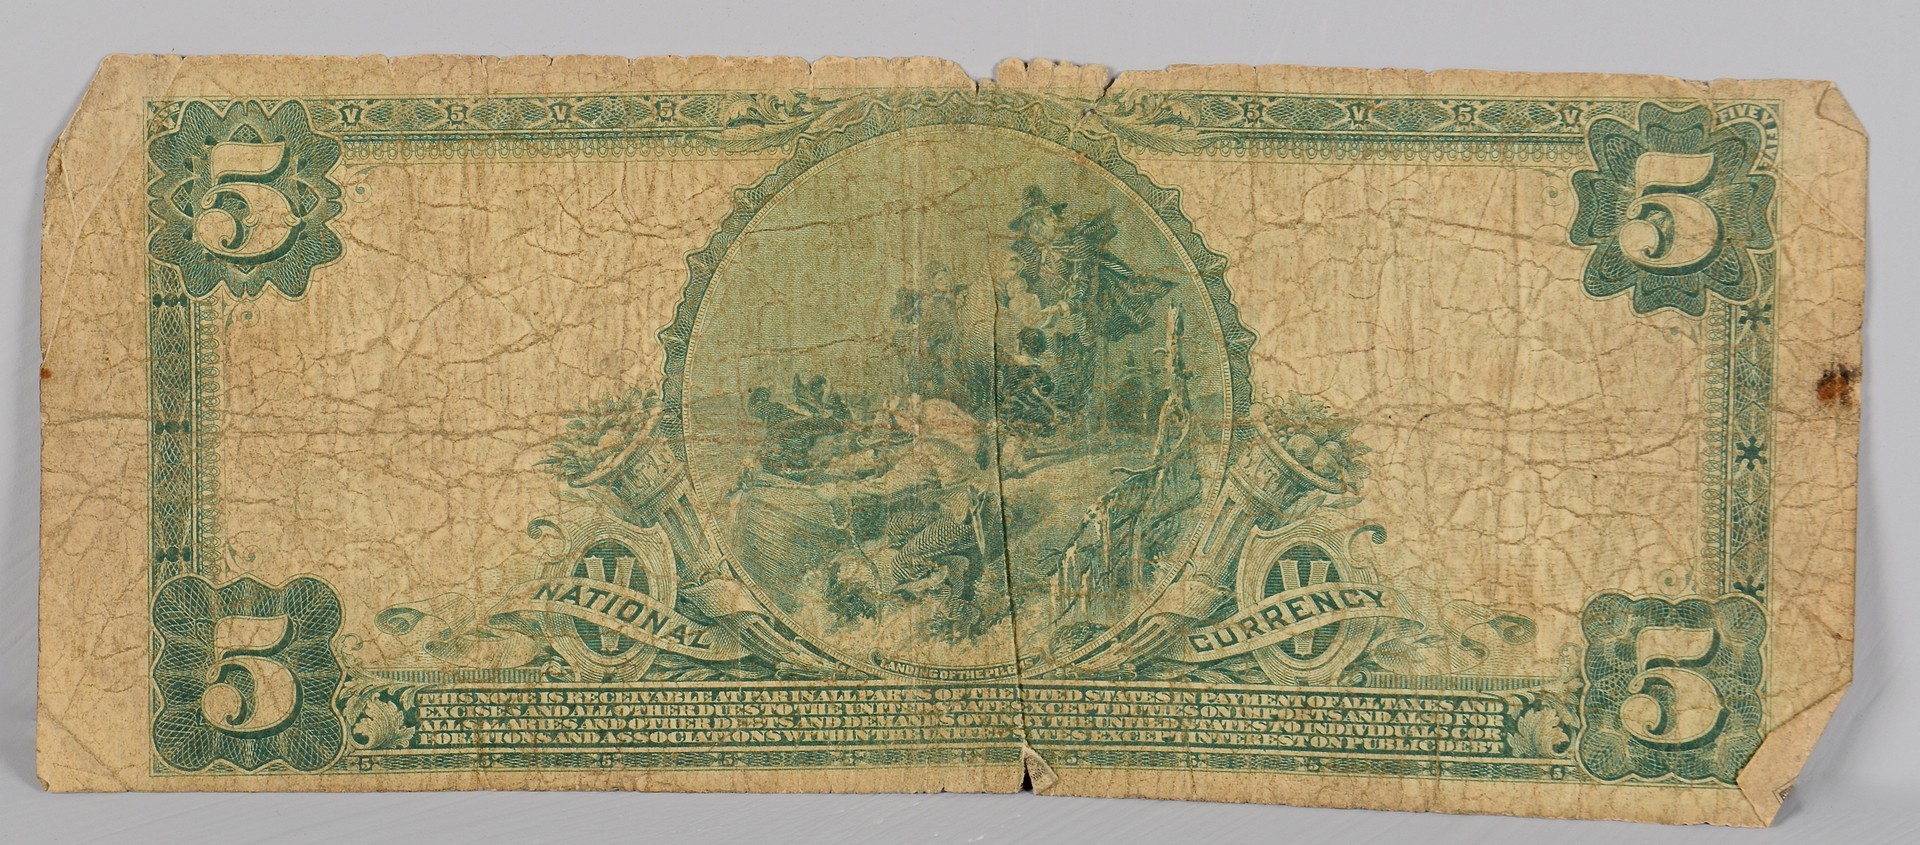 Lot 555: Civil War era Bond & Stock Certificate